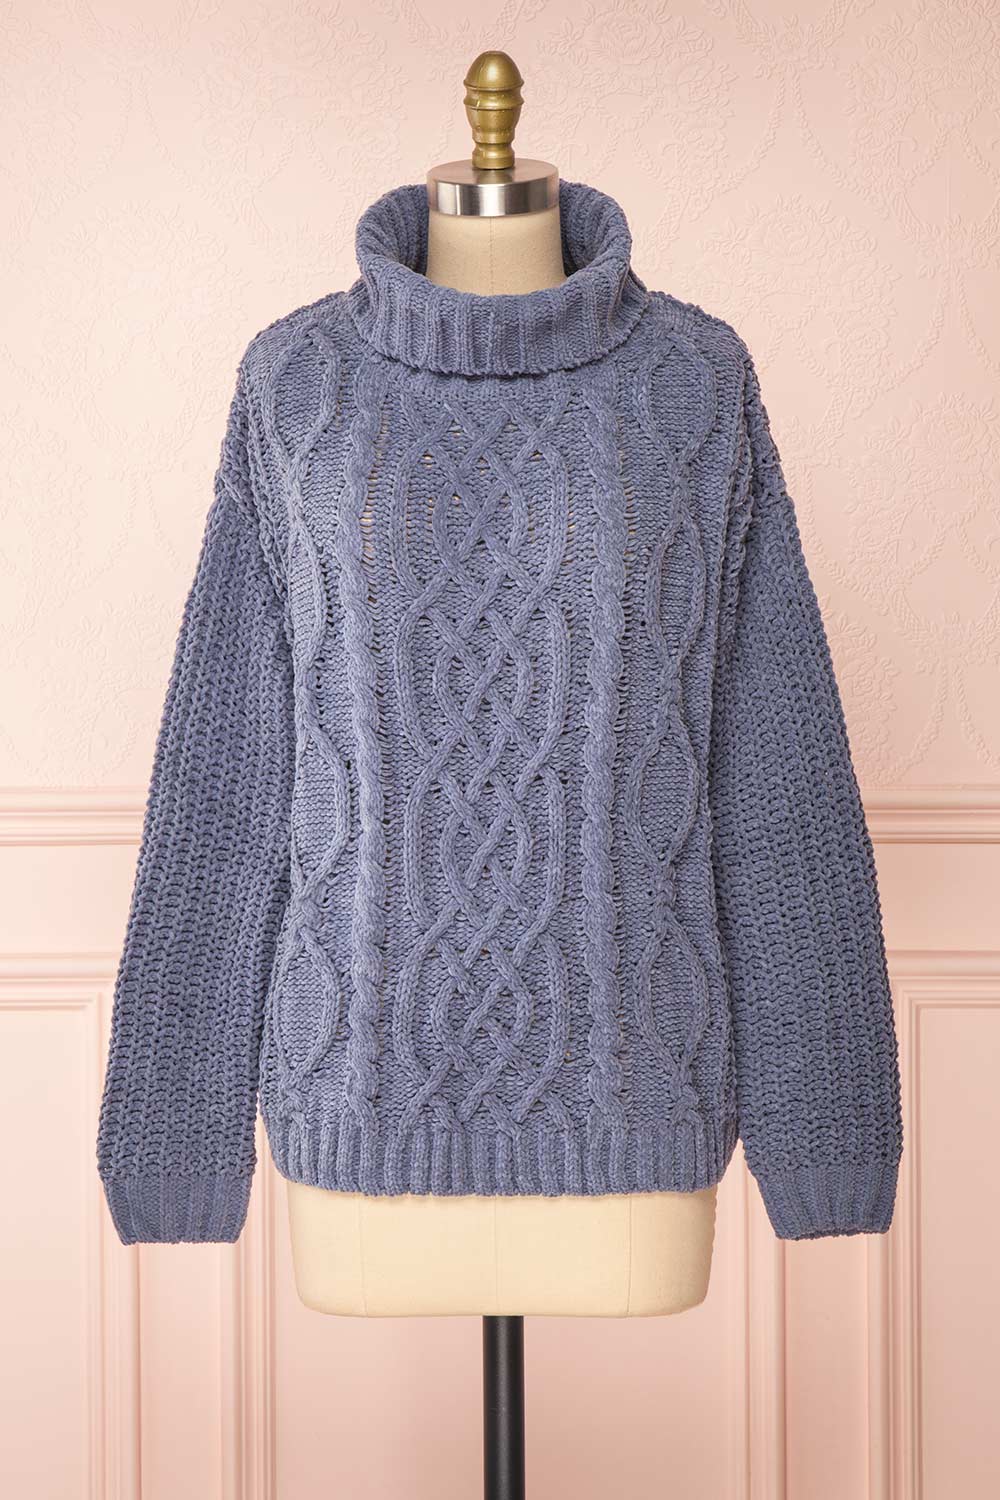 Irma Blue Turtleneck Knit Sweater | La petite garçonne front view 